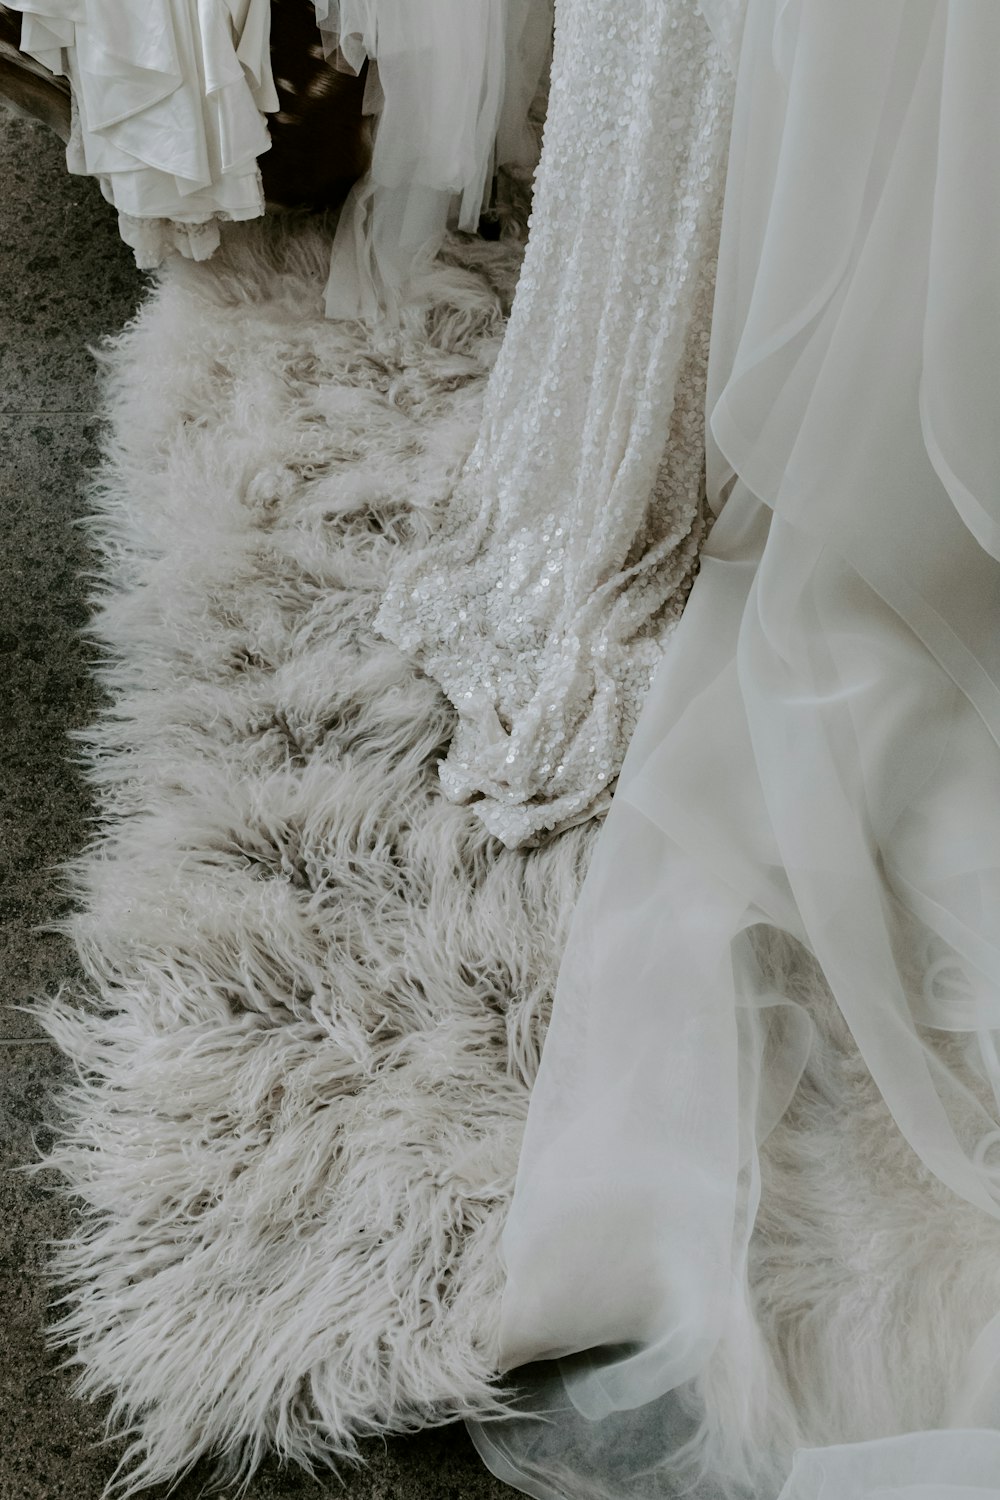 white floral wedding gown on gray textile